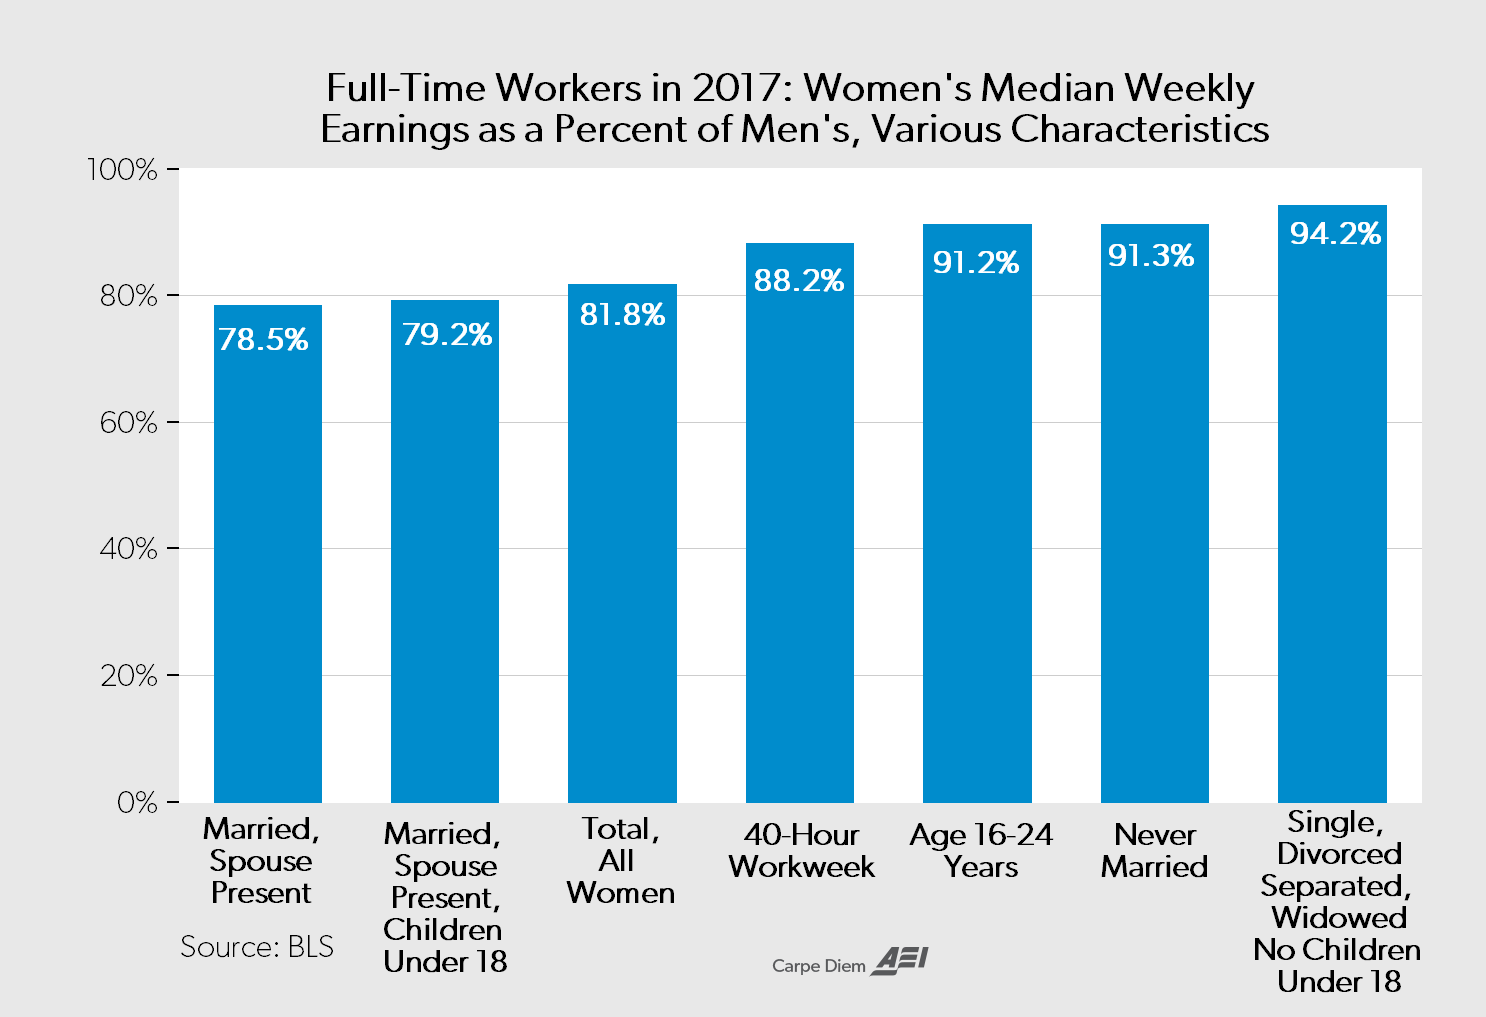 Do men earn more than women?